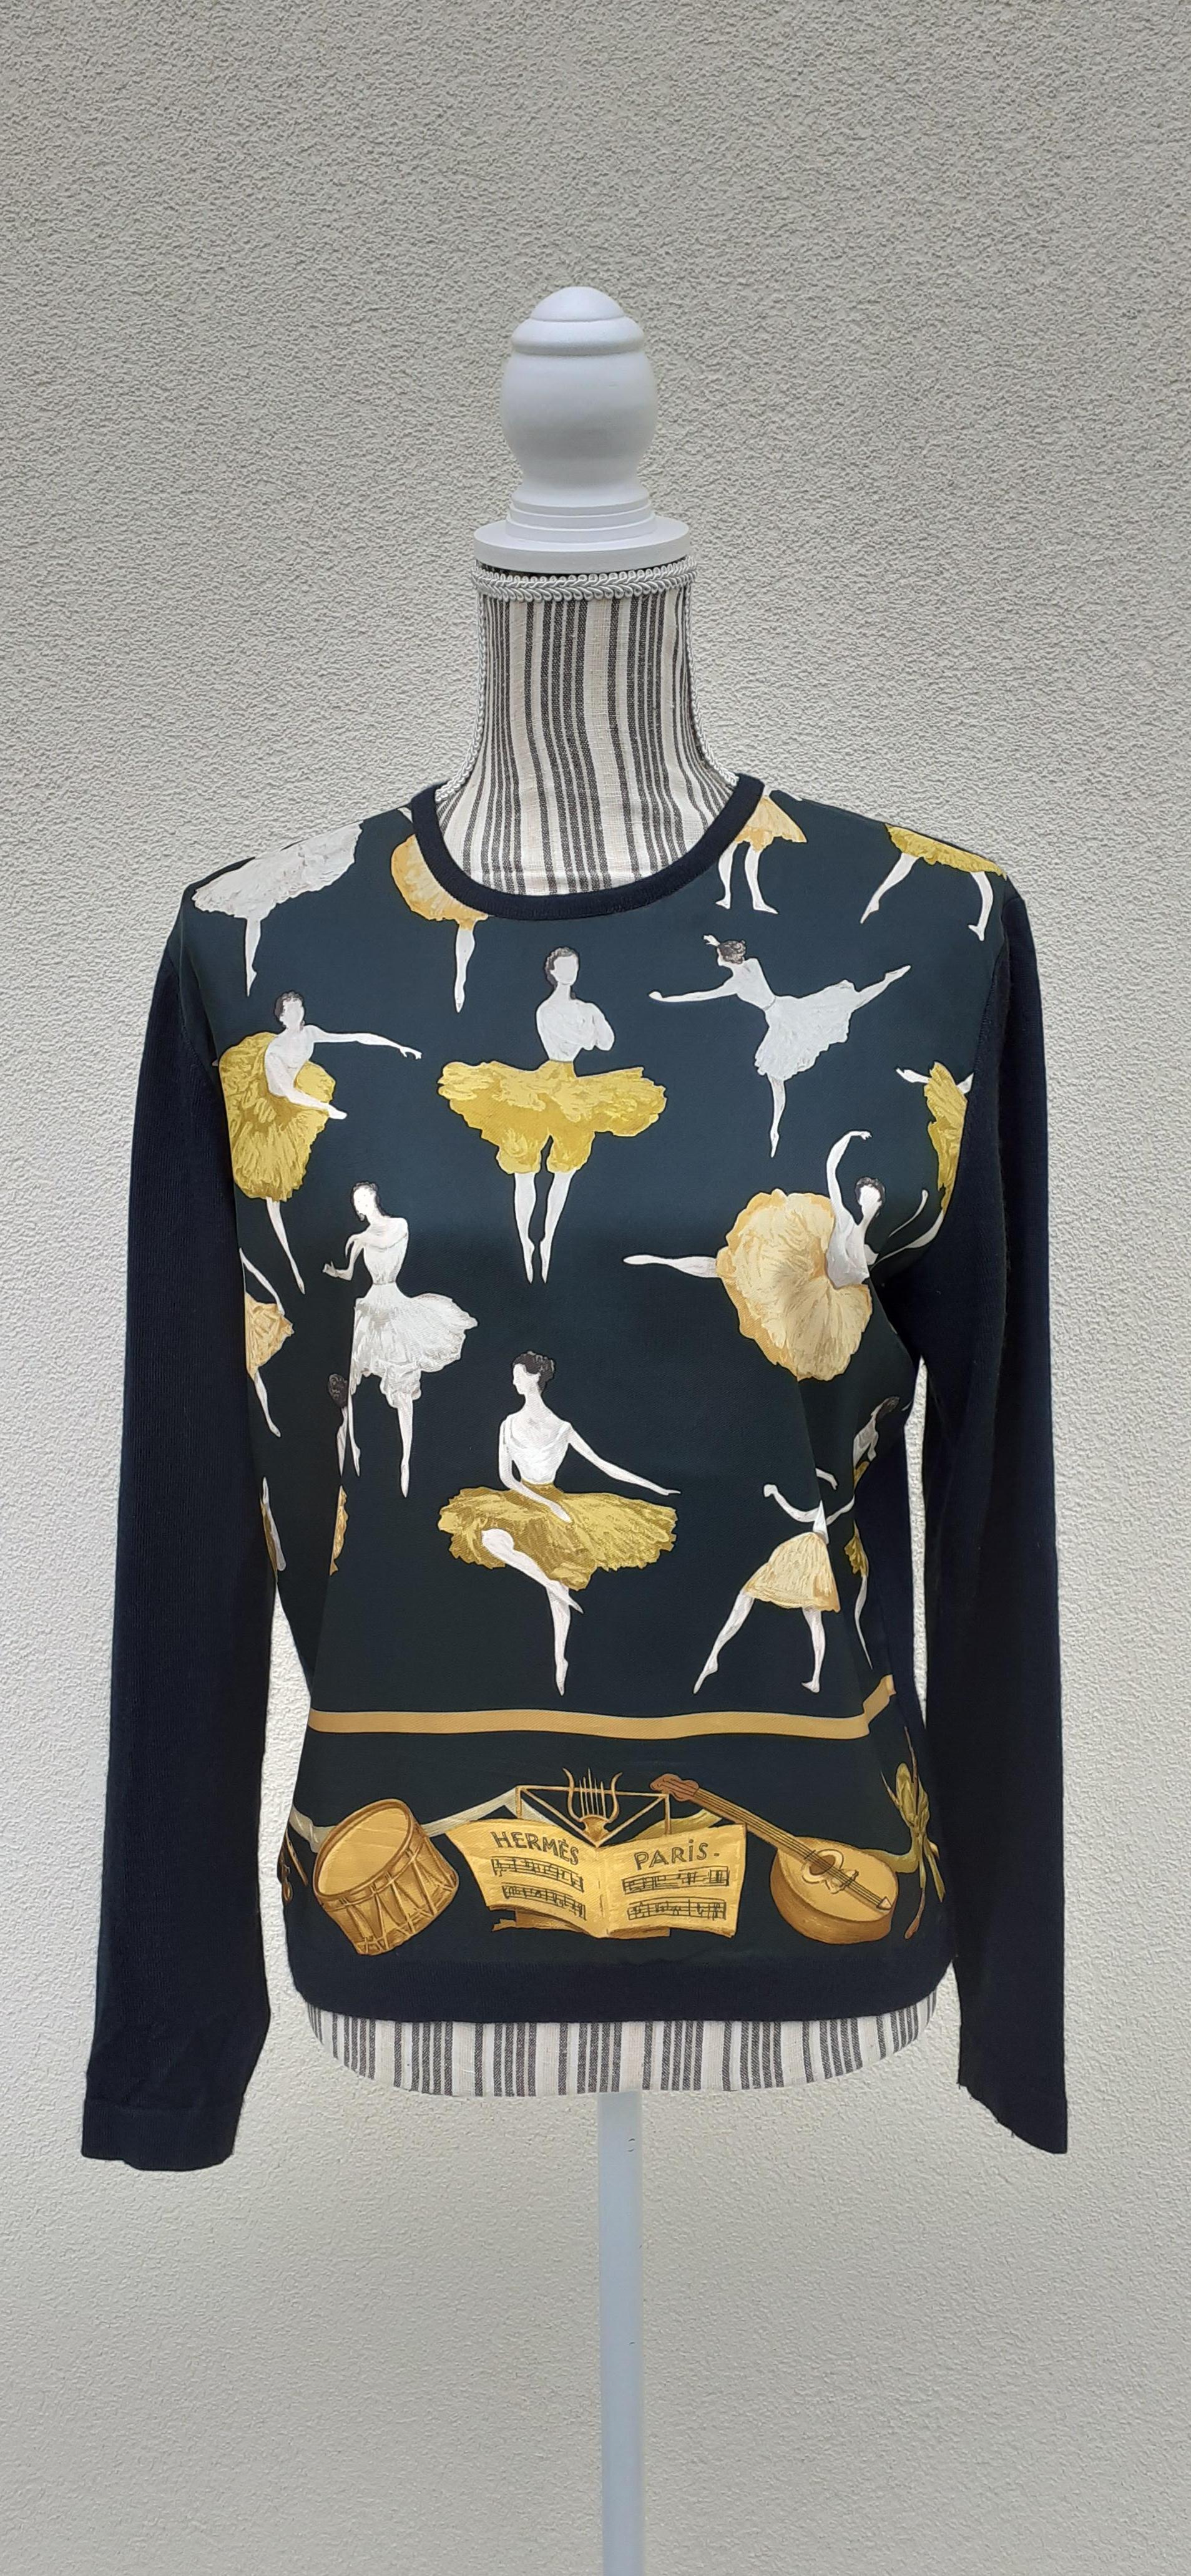 Gorgeous Authentic Hermès Sweater

Pattern: 